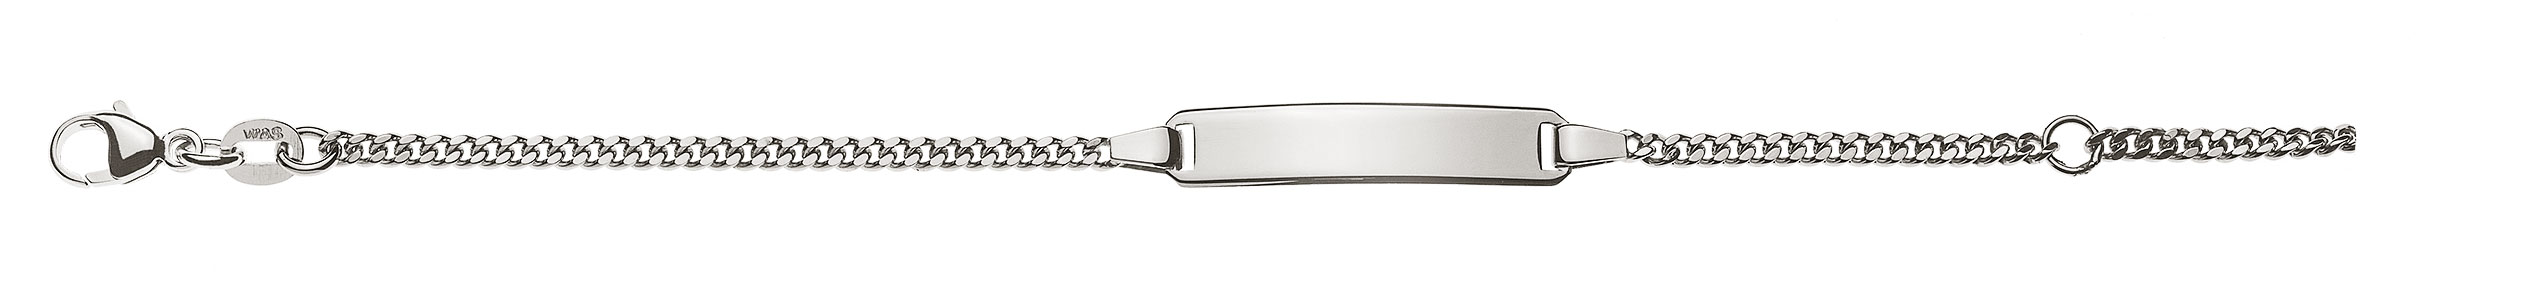 AURONOS Prestige ID-Bracelet en or blanc 18k Chaîne blindée polie 18cm